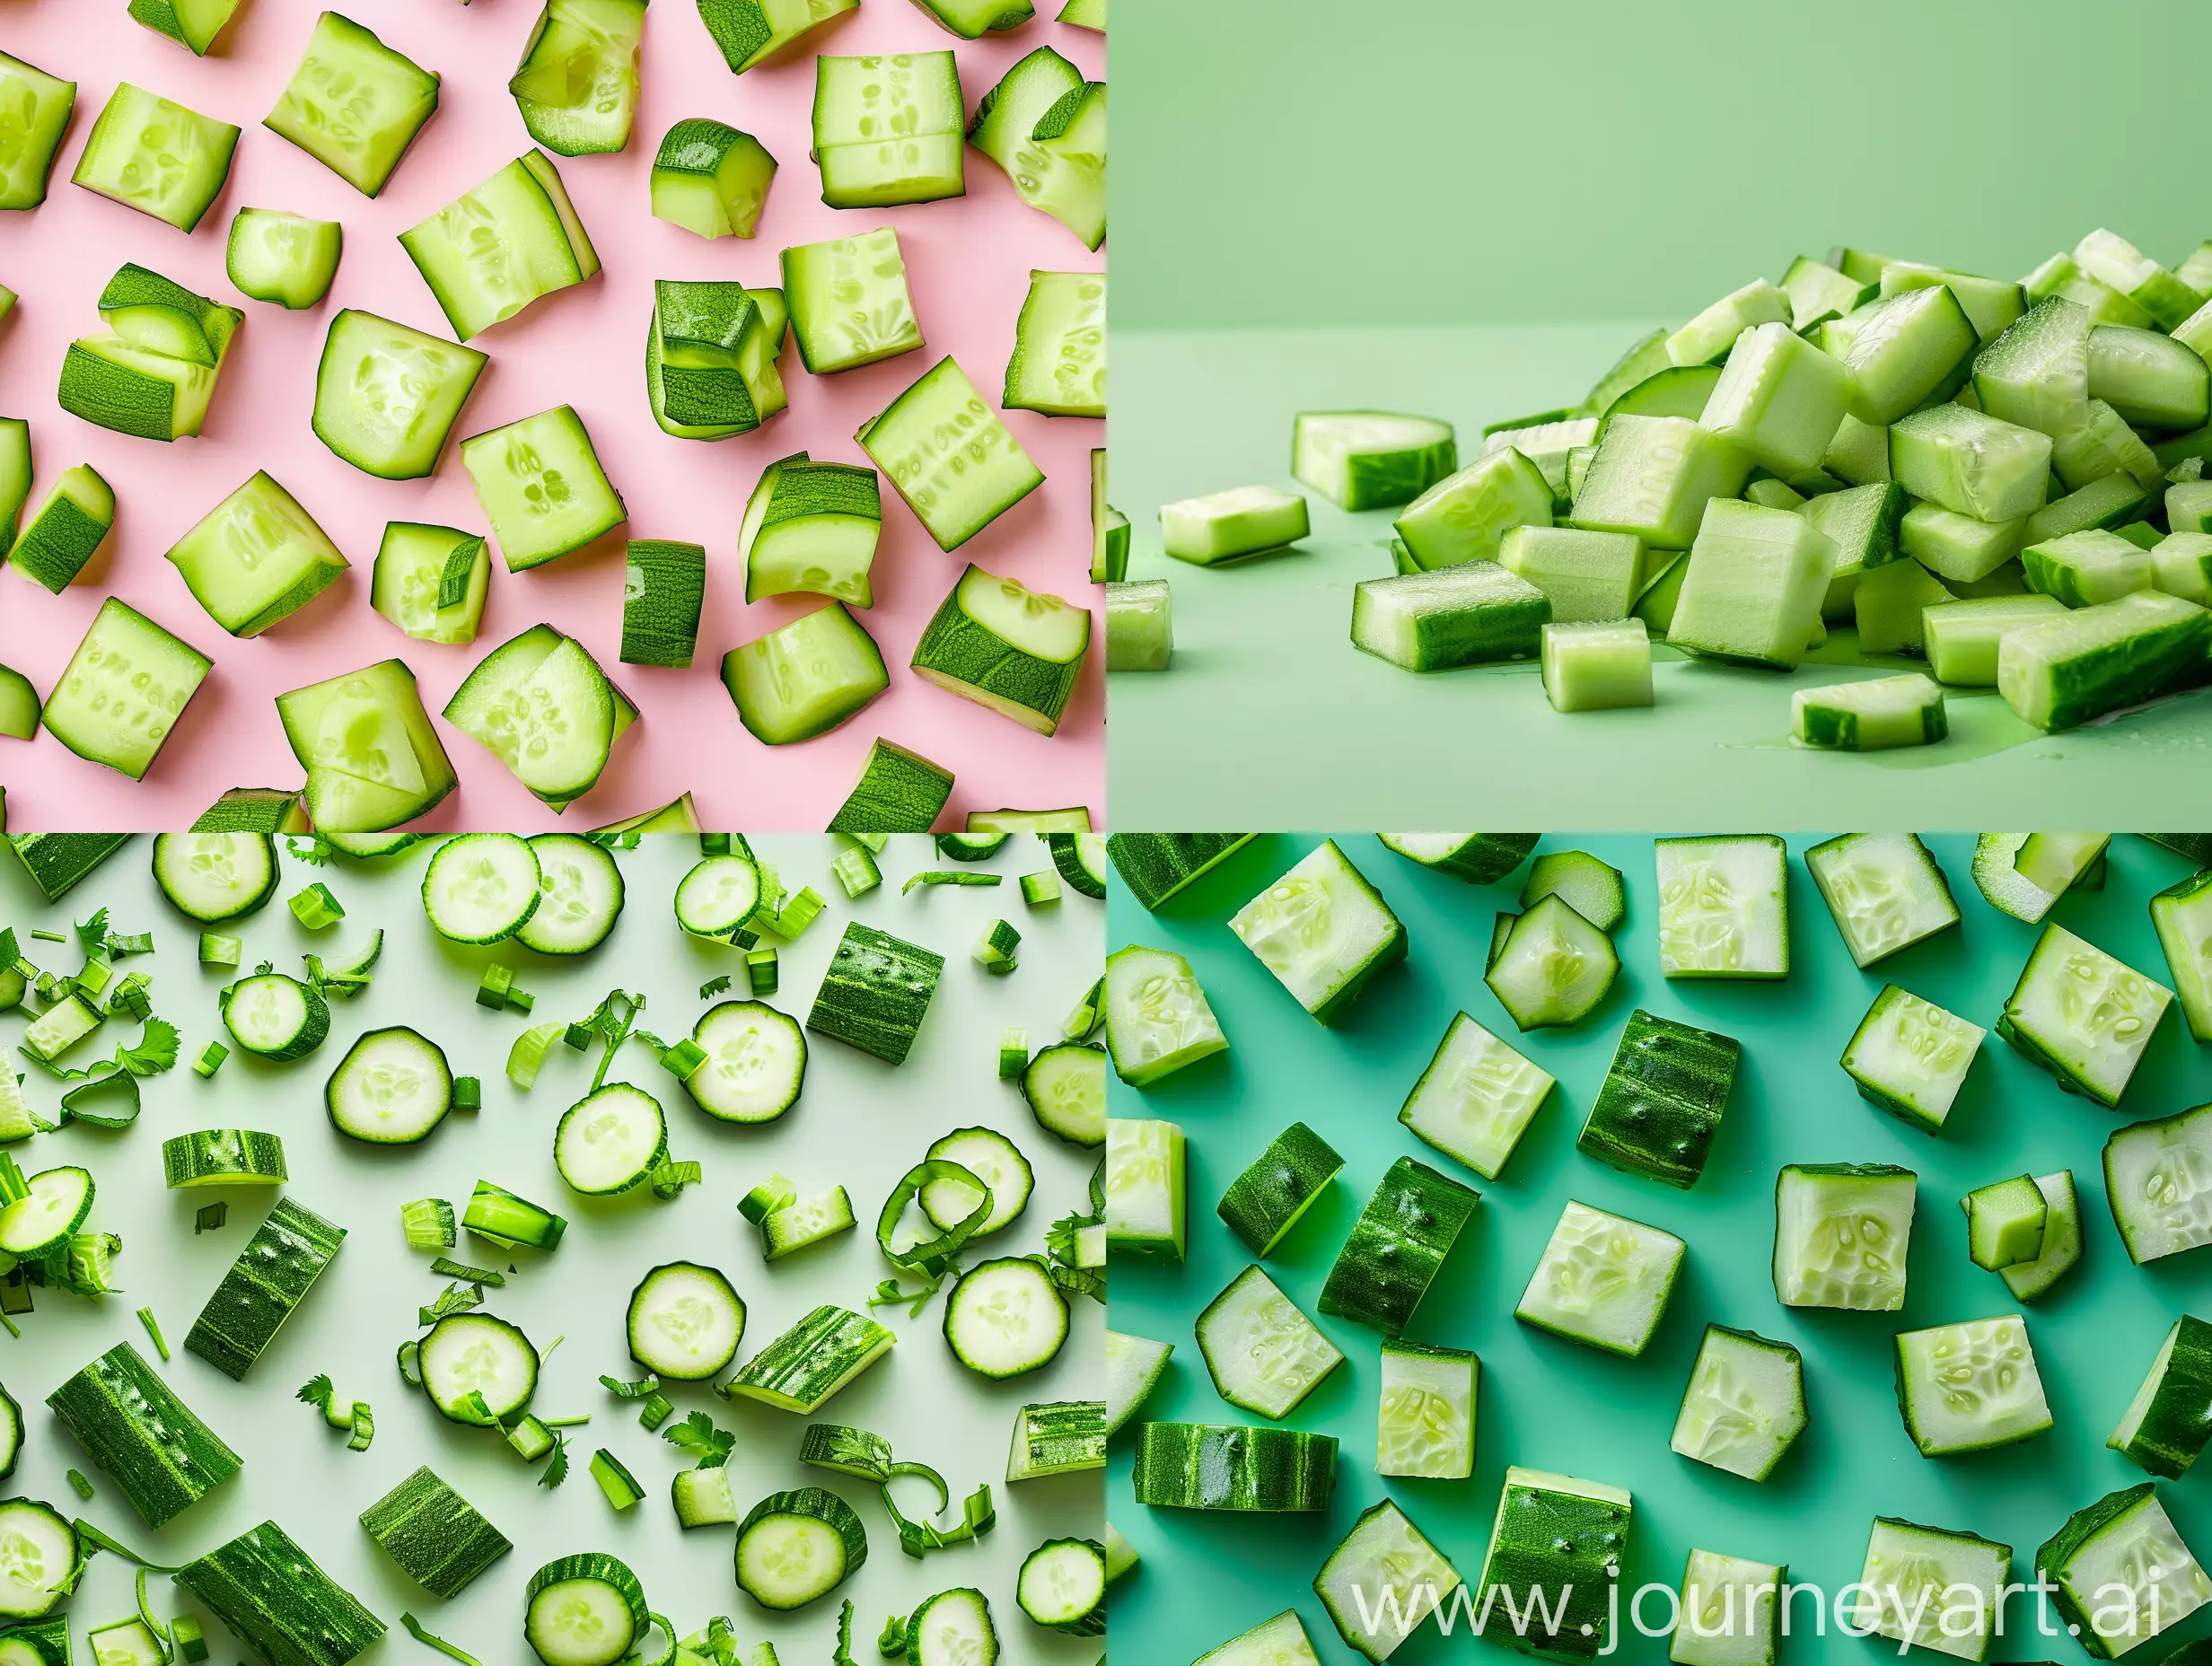 Vibrant-Studio-Photography-Cucumber-Slices-Arrayed-in-Harmonious-Patterns